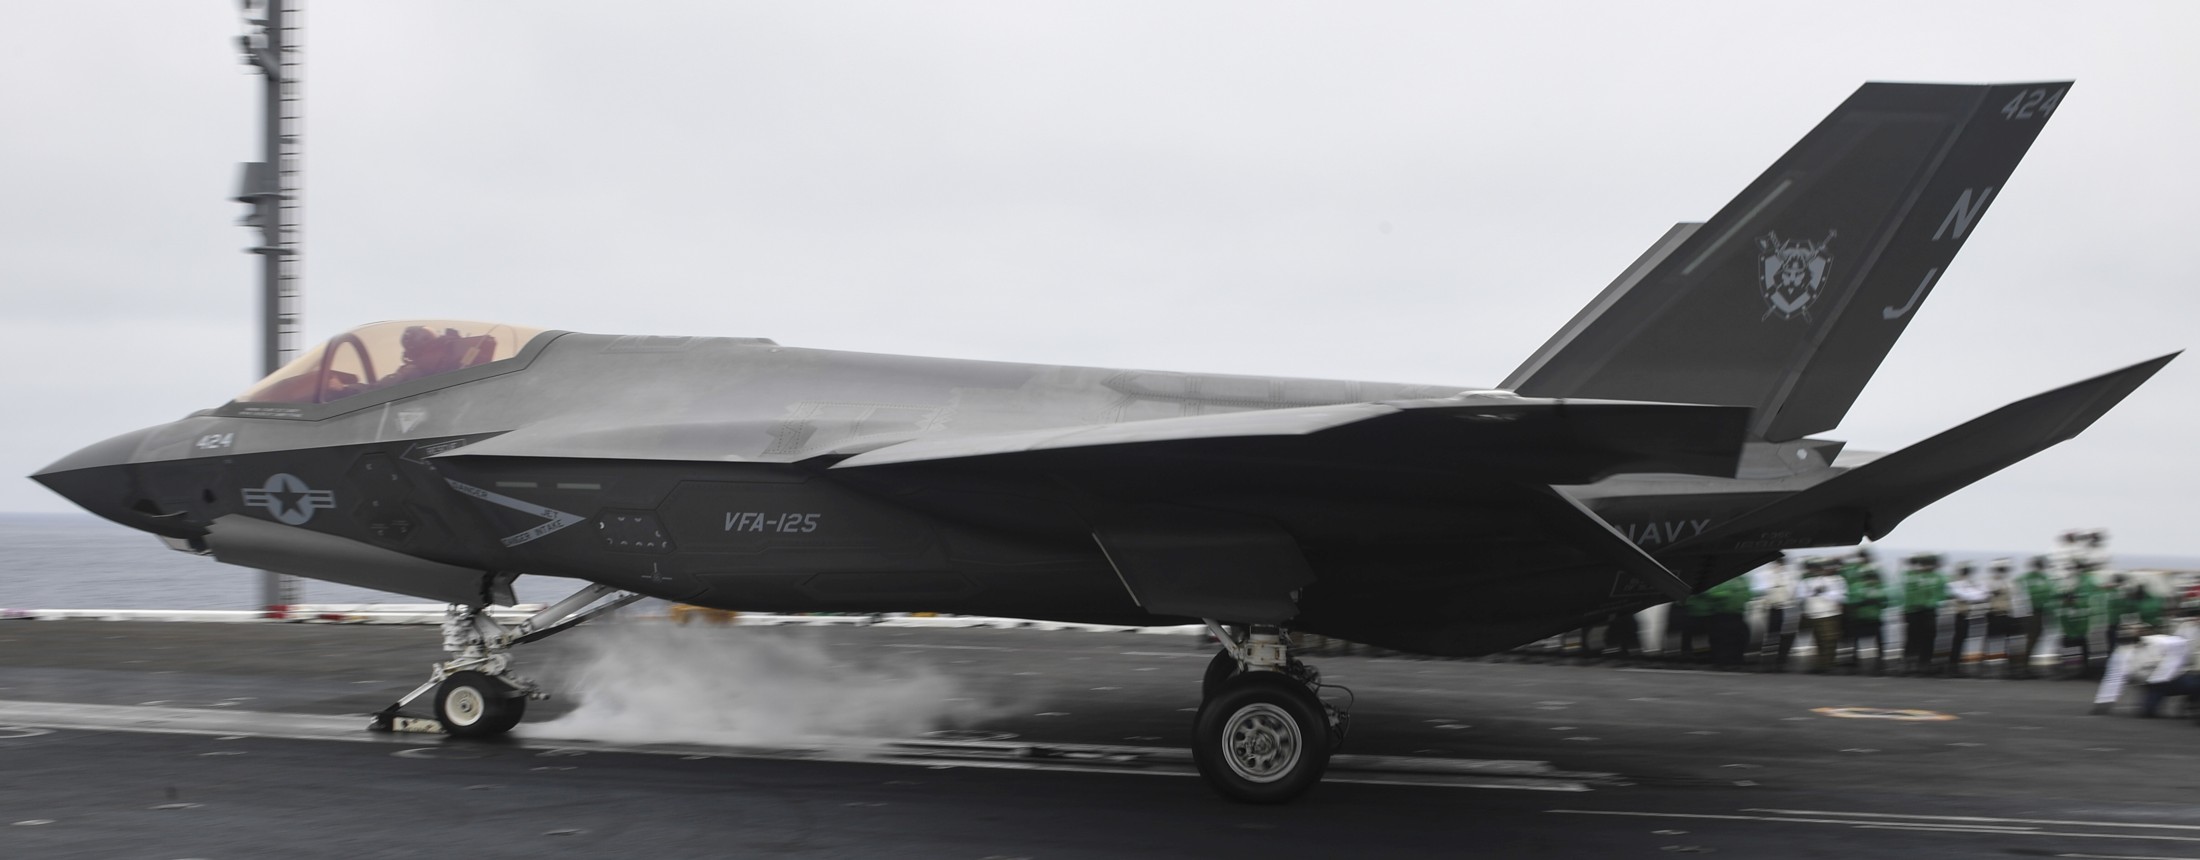 vfa-125 rough raiders strike fighter squadron f-35c lightning ii jsf frs 71